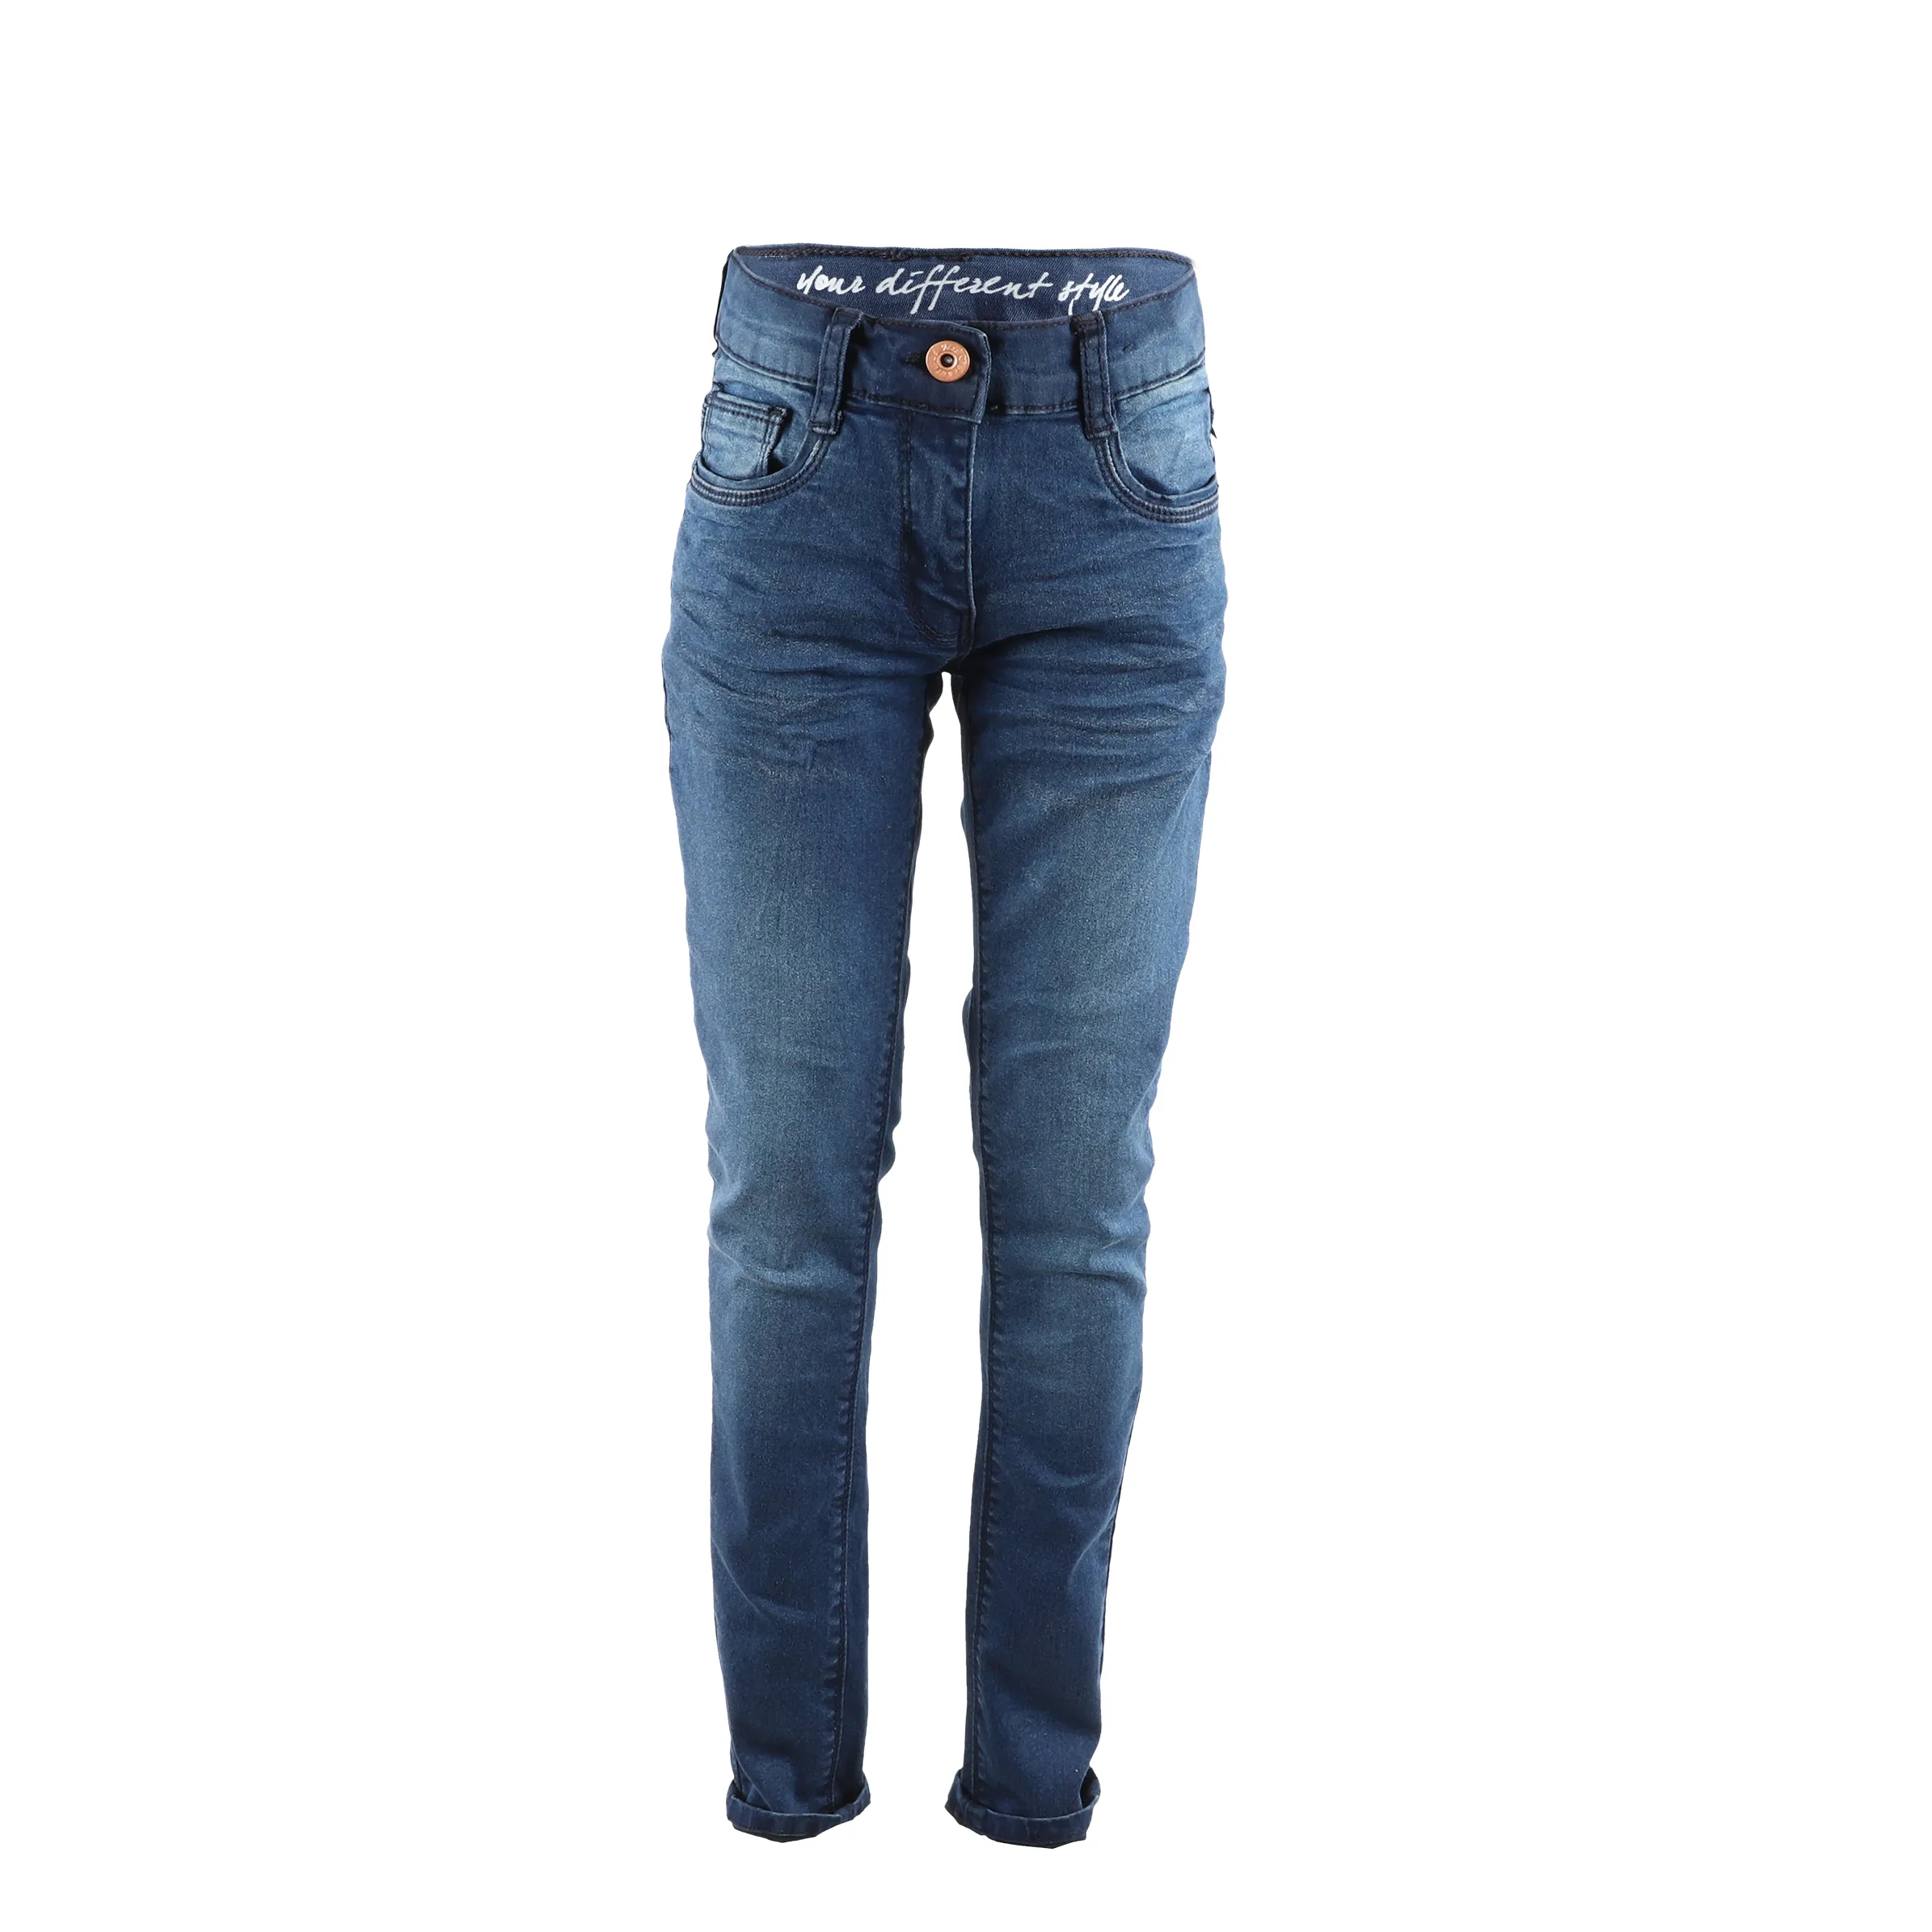 Stop + Go JM Jeans skinny mit kontrastnähten in midblue Blau 890801 MITTELBLAU 1